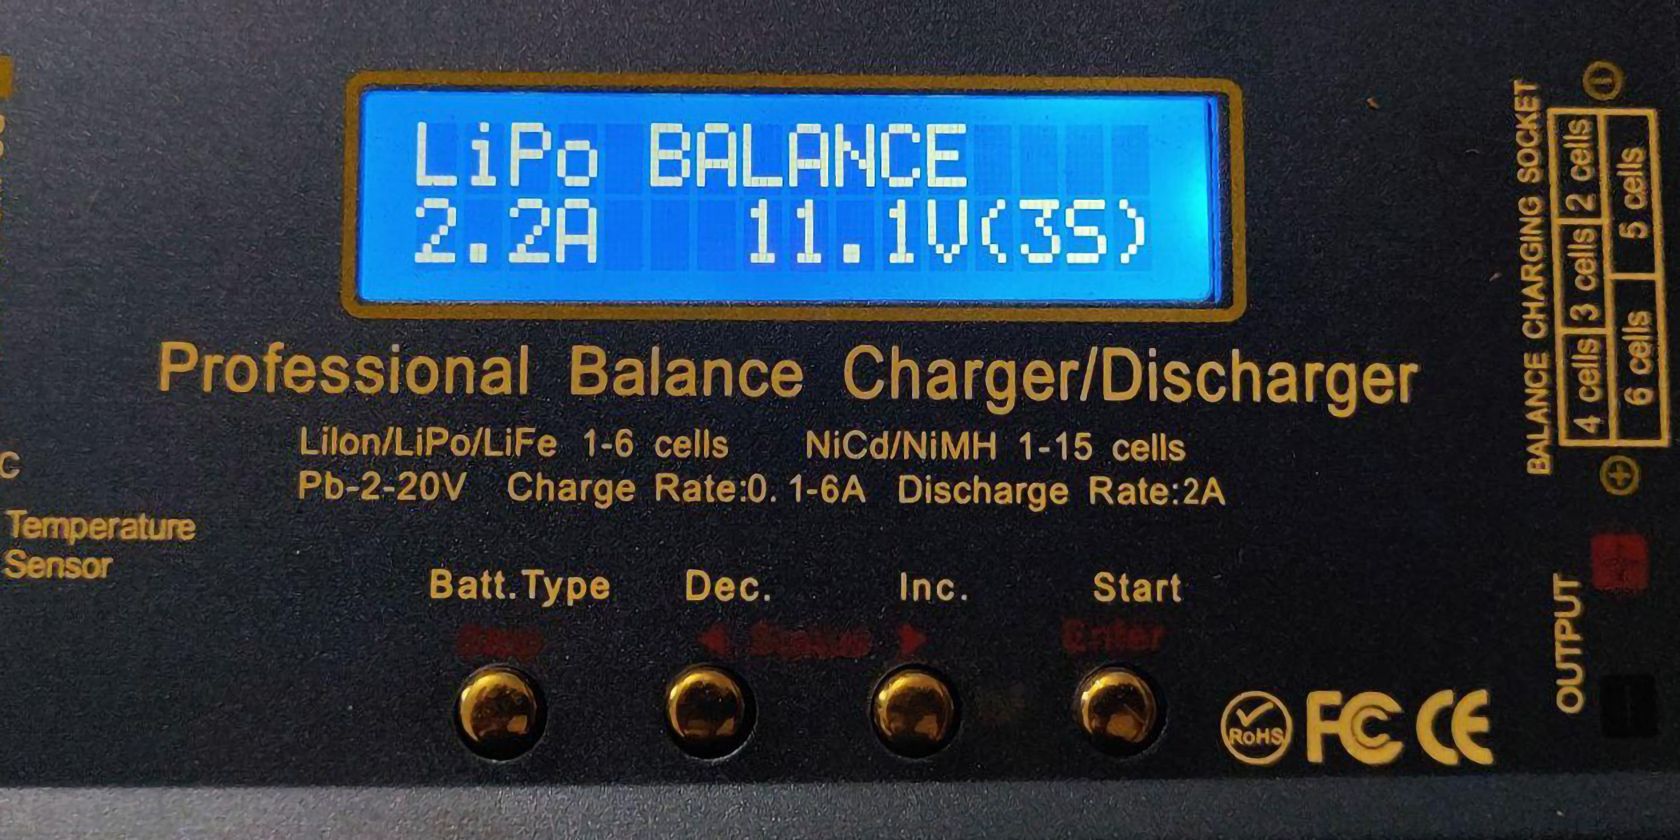 The LiPo balance charging setting